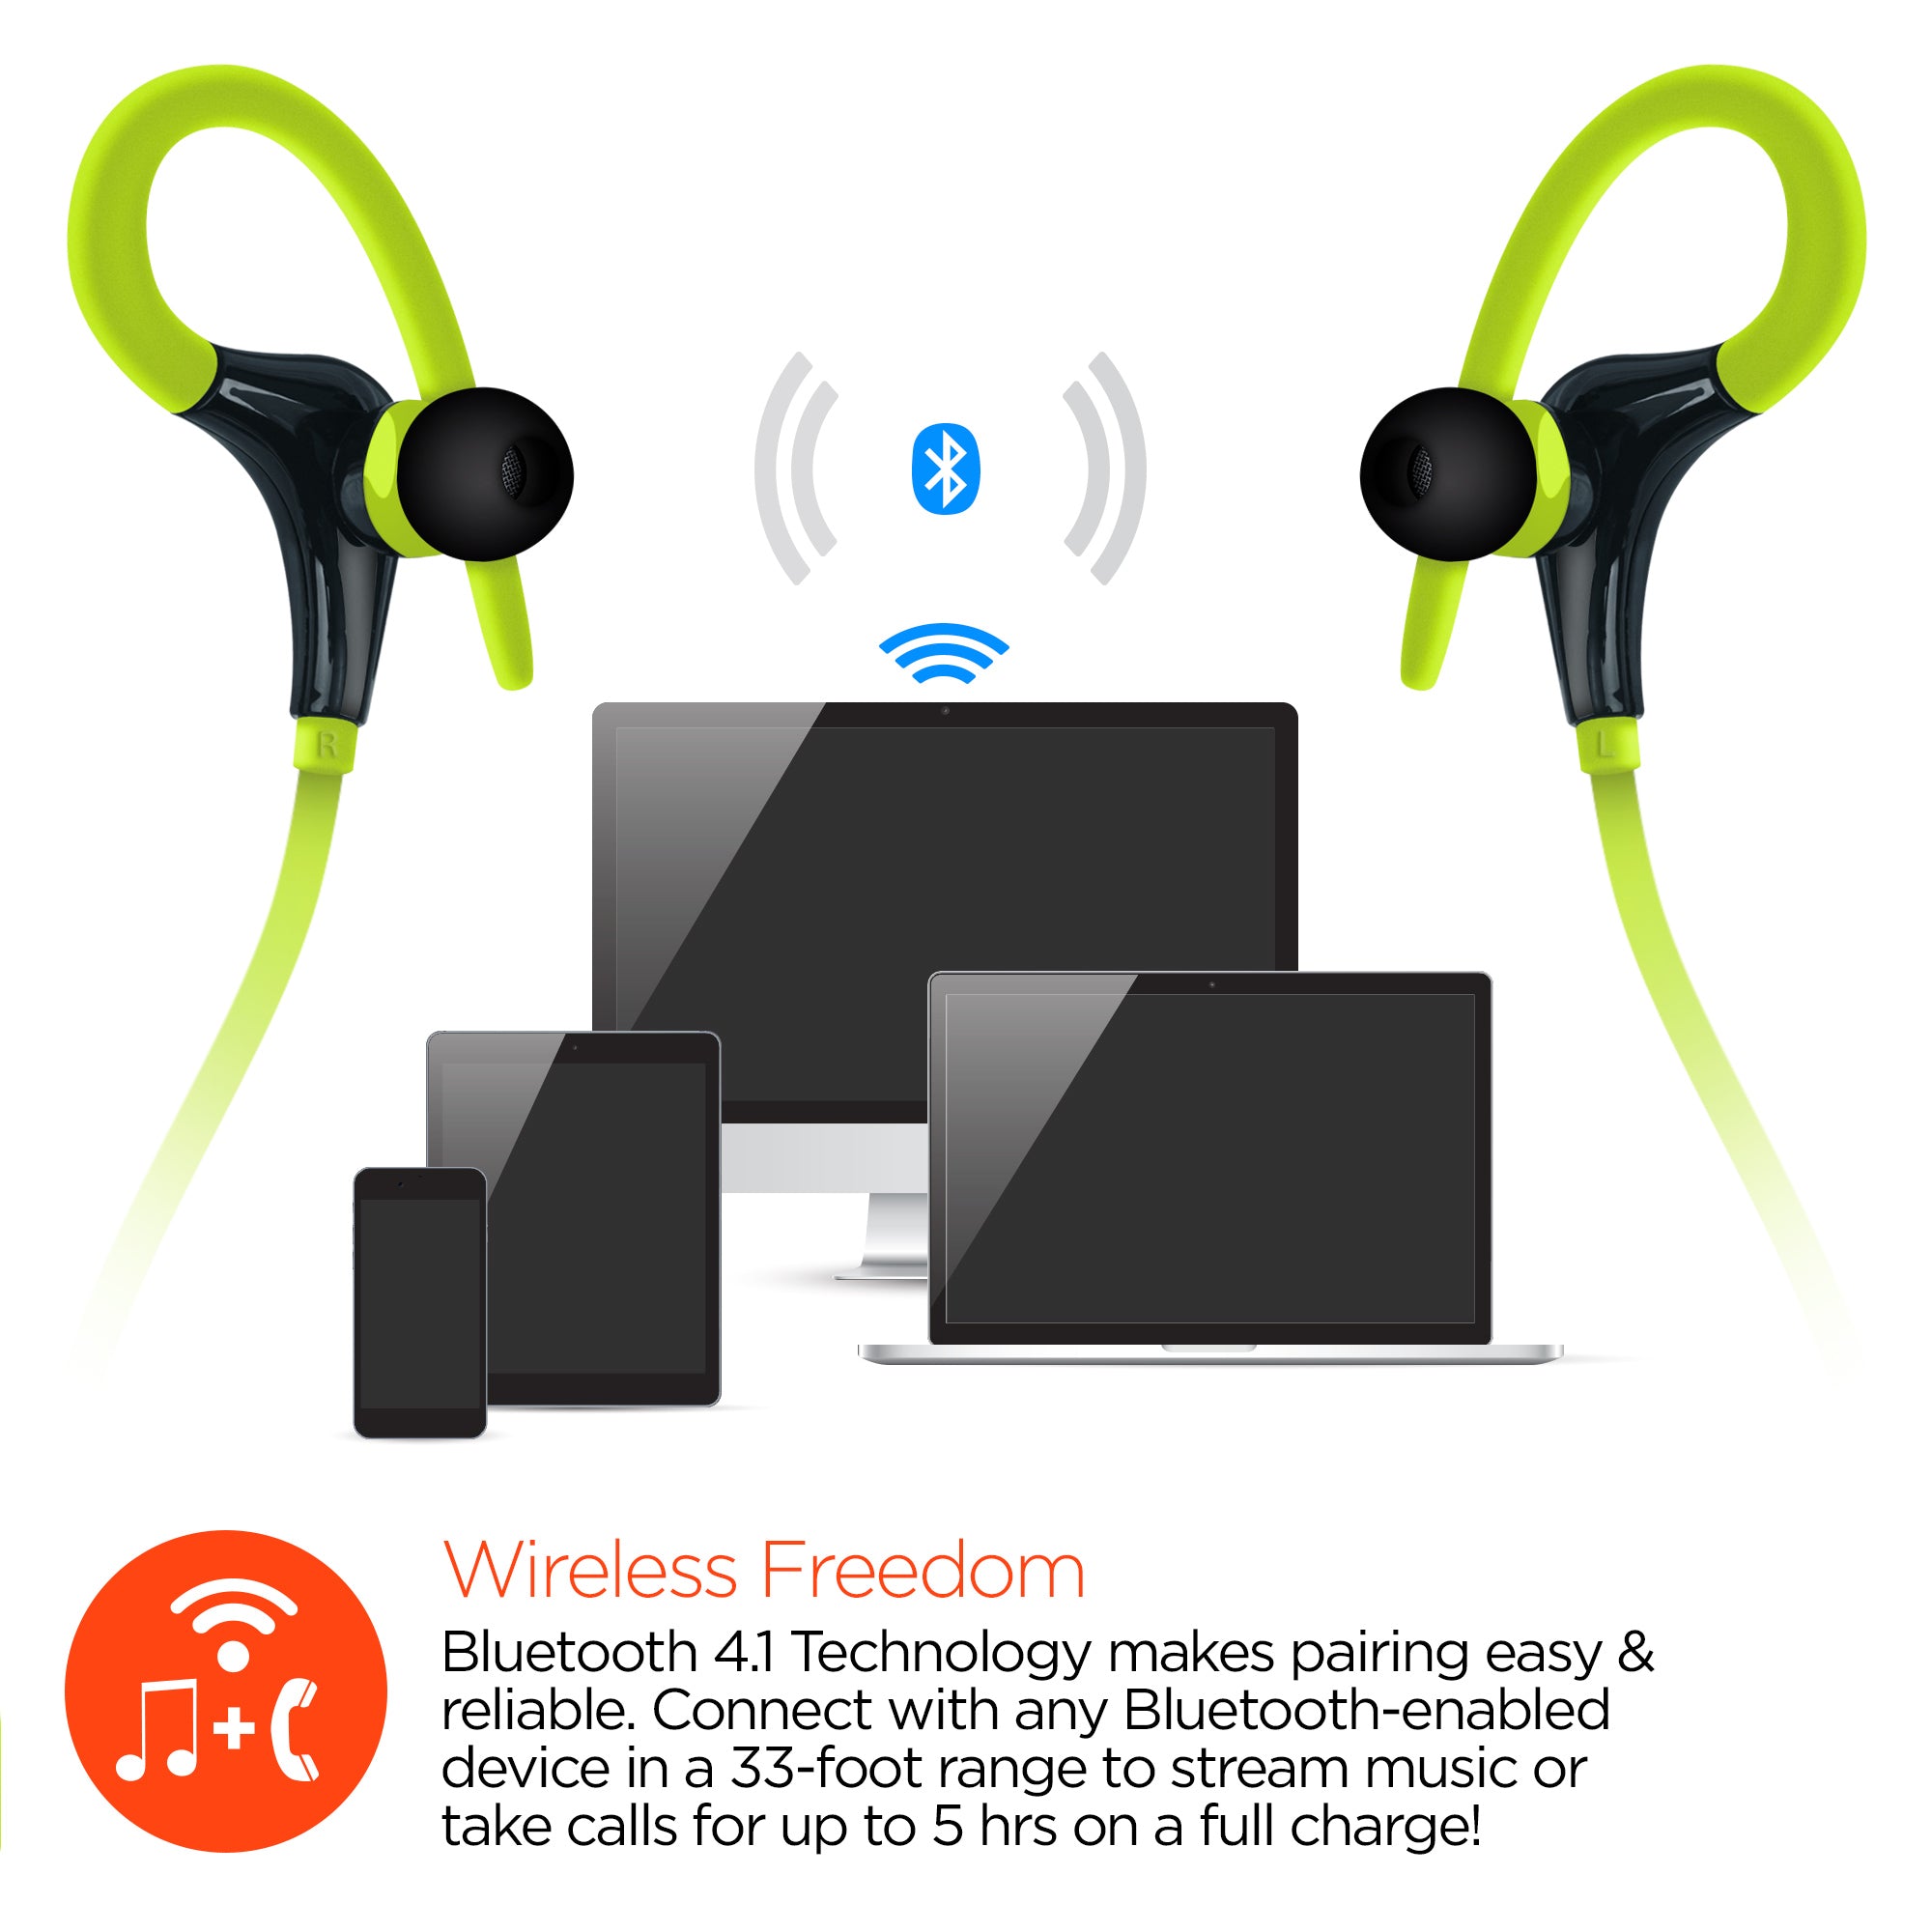 Marathon Sport Wireless Earphones - Energy Green